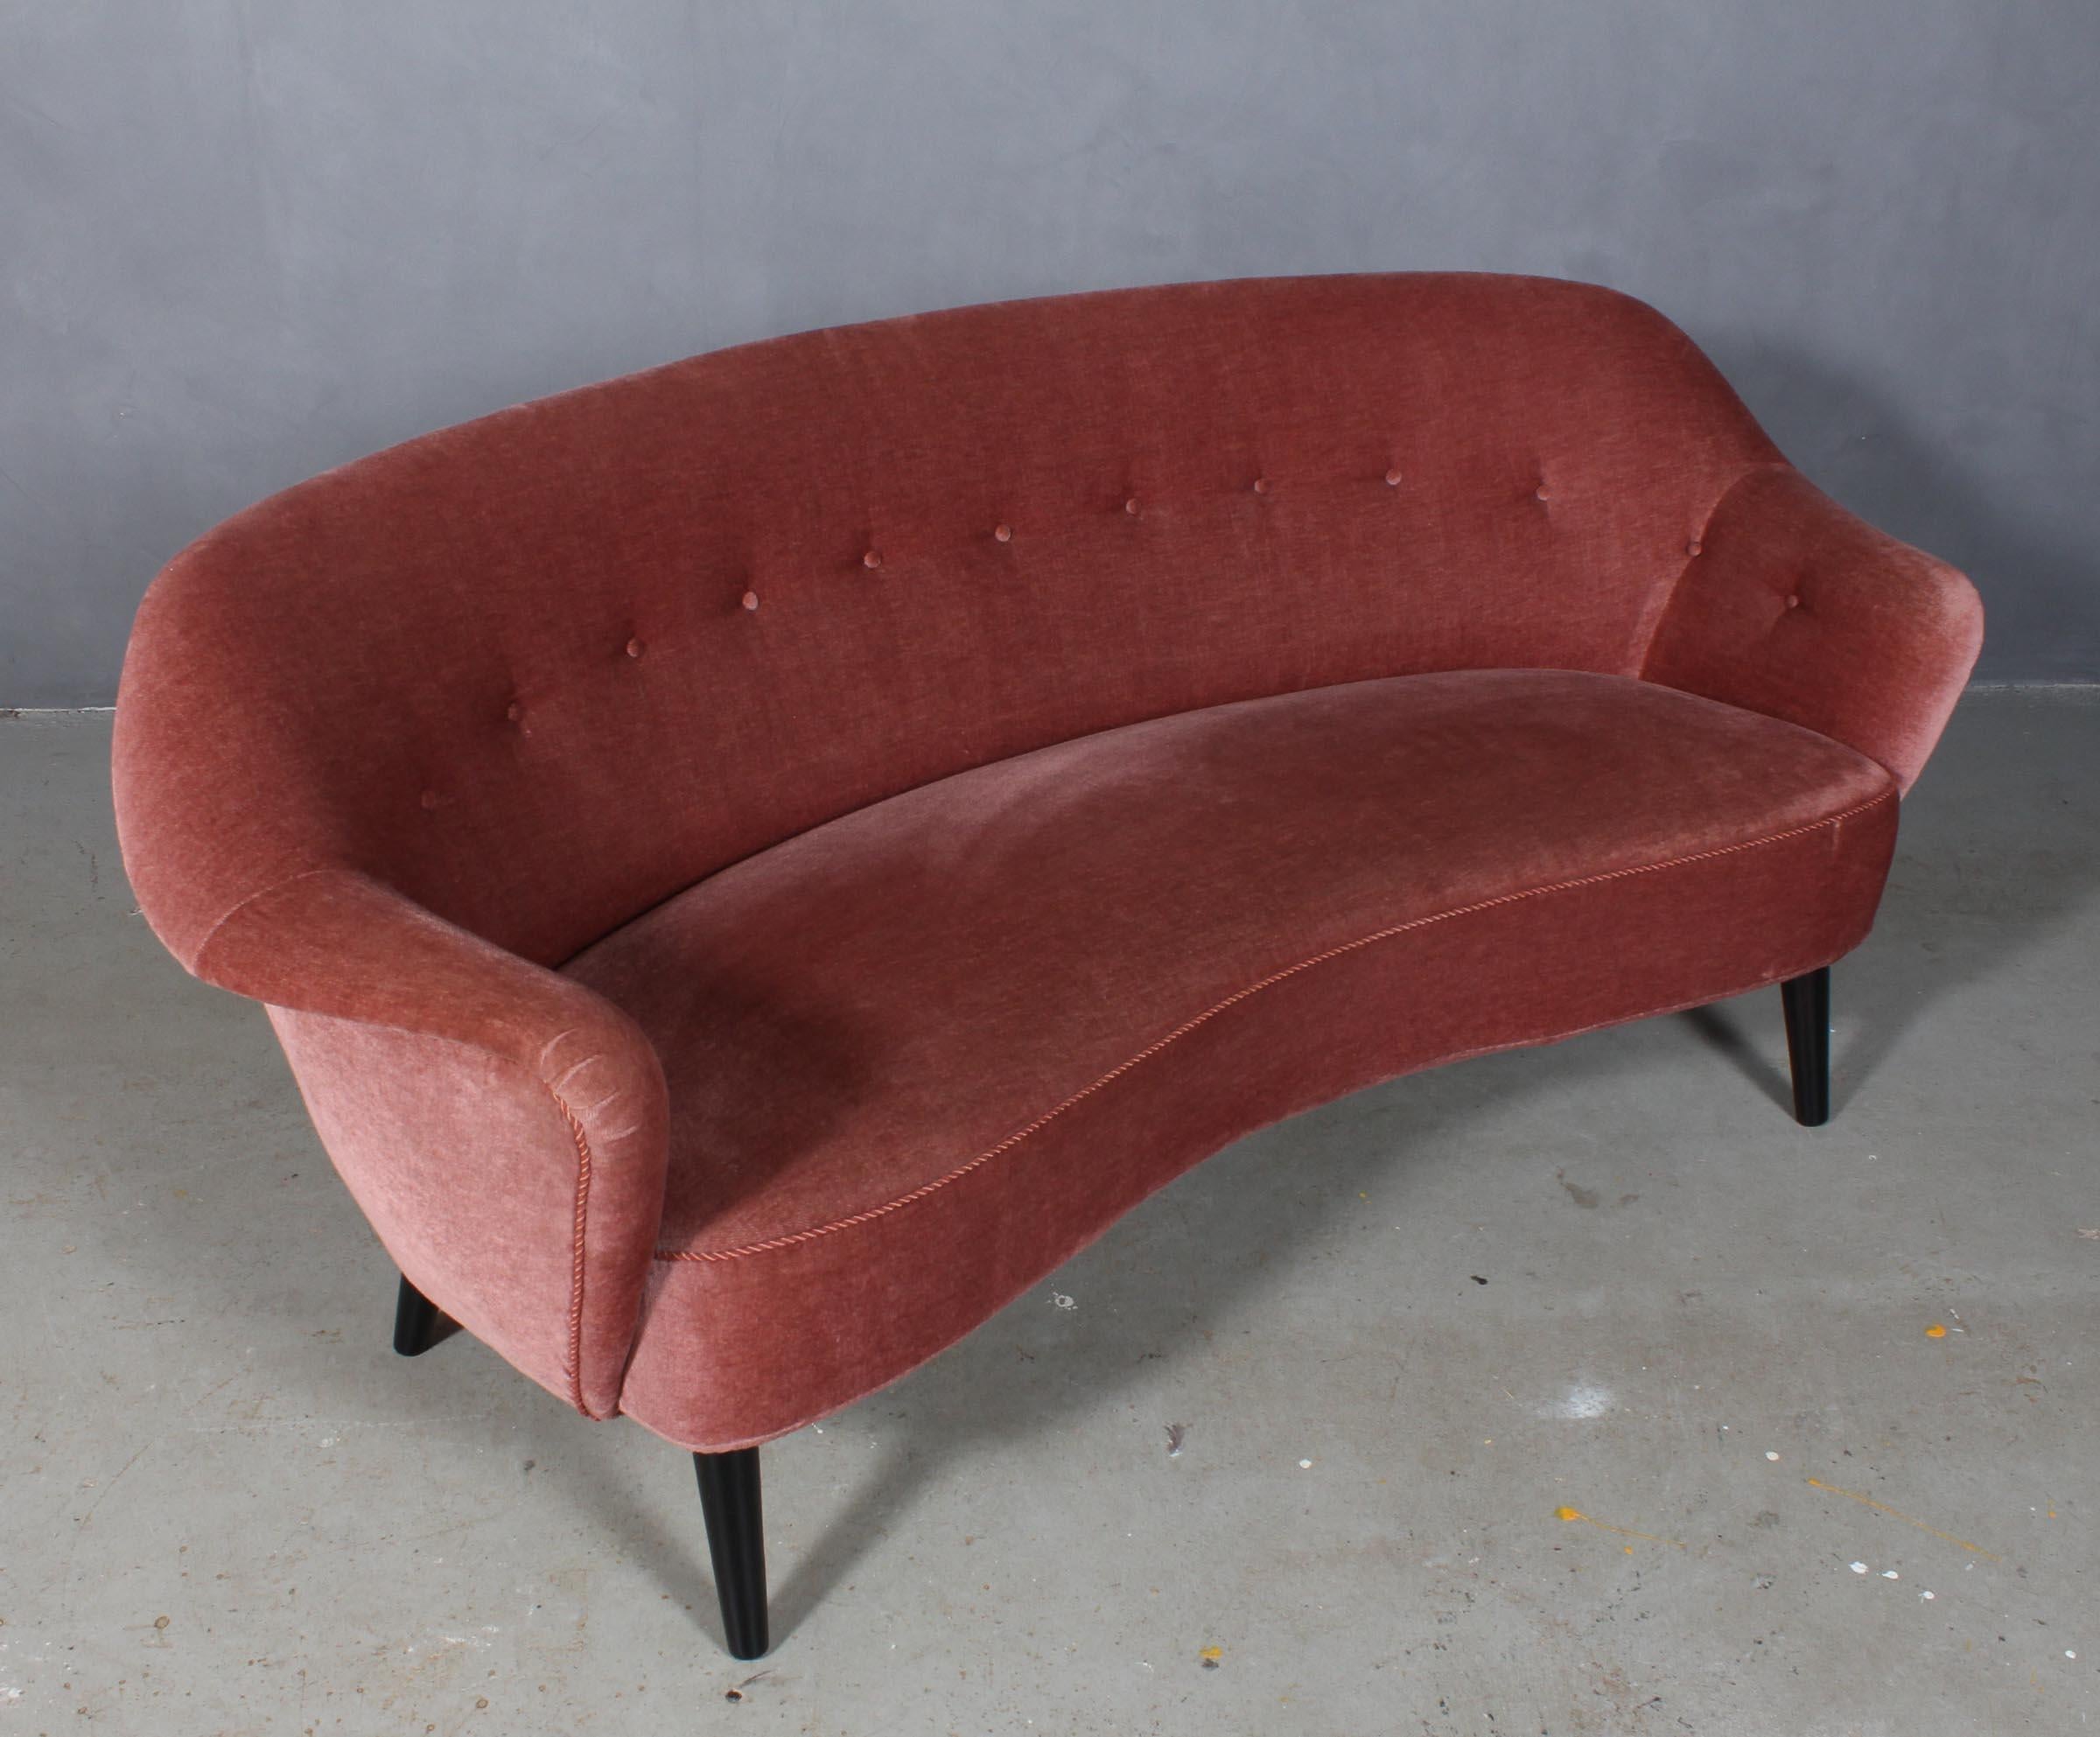 Arne Hovmand-Olsen. Three seat sofa with original velvet. Legs of stained wood.

Made in the 1950s, by Pedersen & Knap.